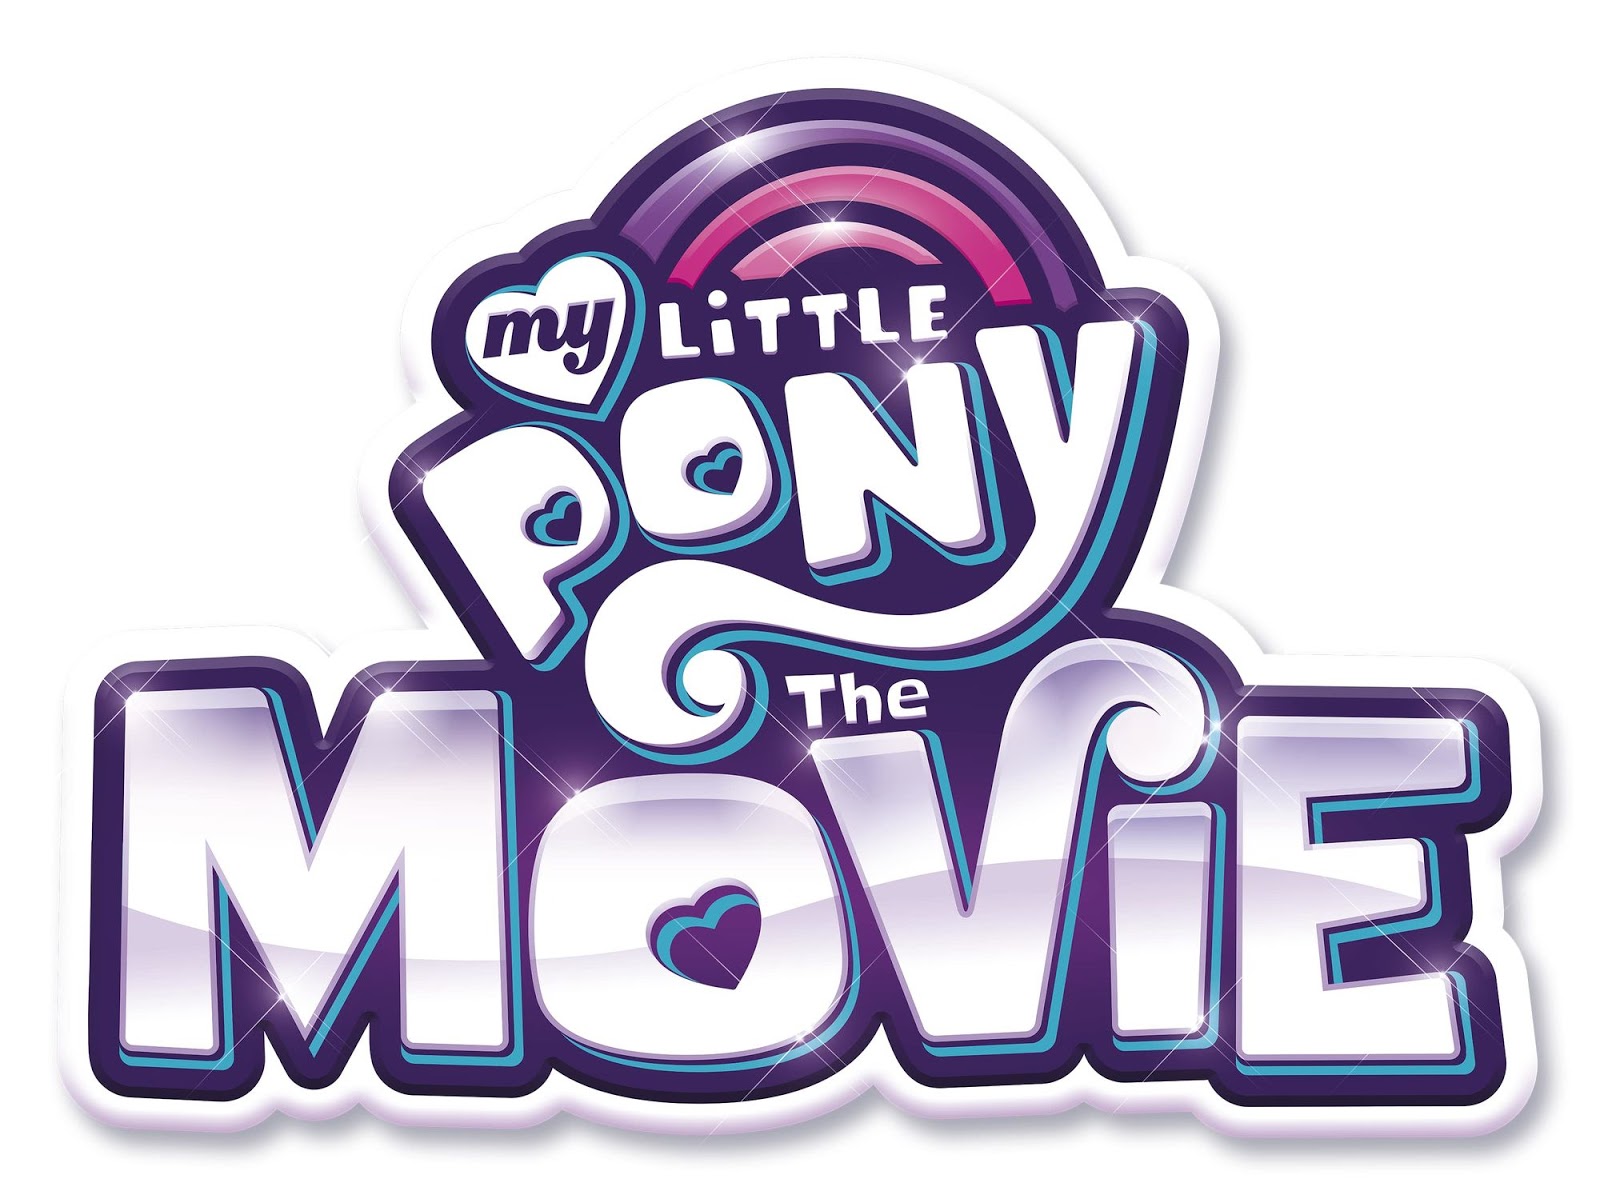 https://4.bp.blogspot.com/-ou1LmBVu6HI/WOJ9fq6cu5I/AAAAAAAAD2Y/DysZwBgO-jIpJF-AvYLqueFAX3PwHsx_ACLcB/s1600/My_Little_Pony_The_Movie_official_logo.jpg